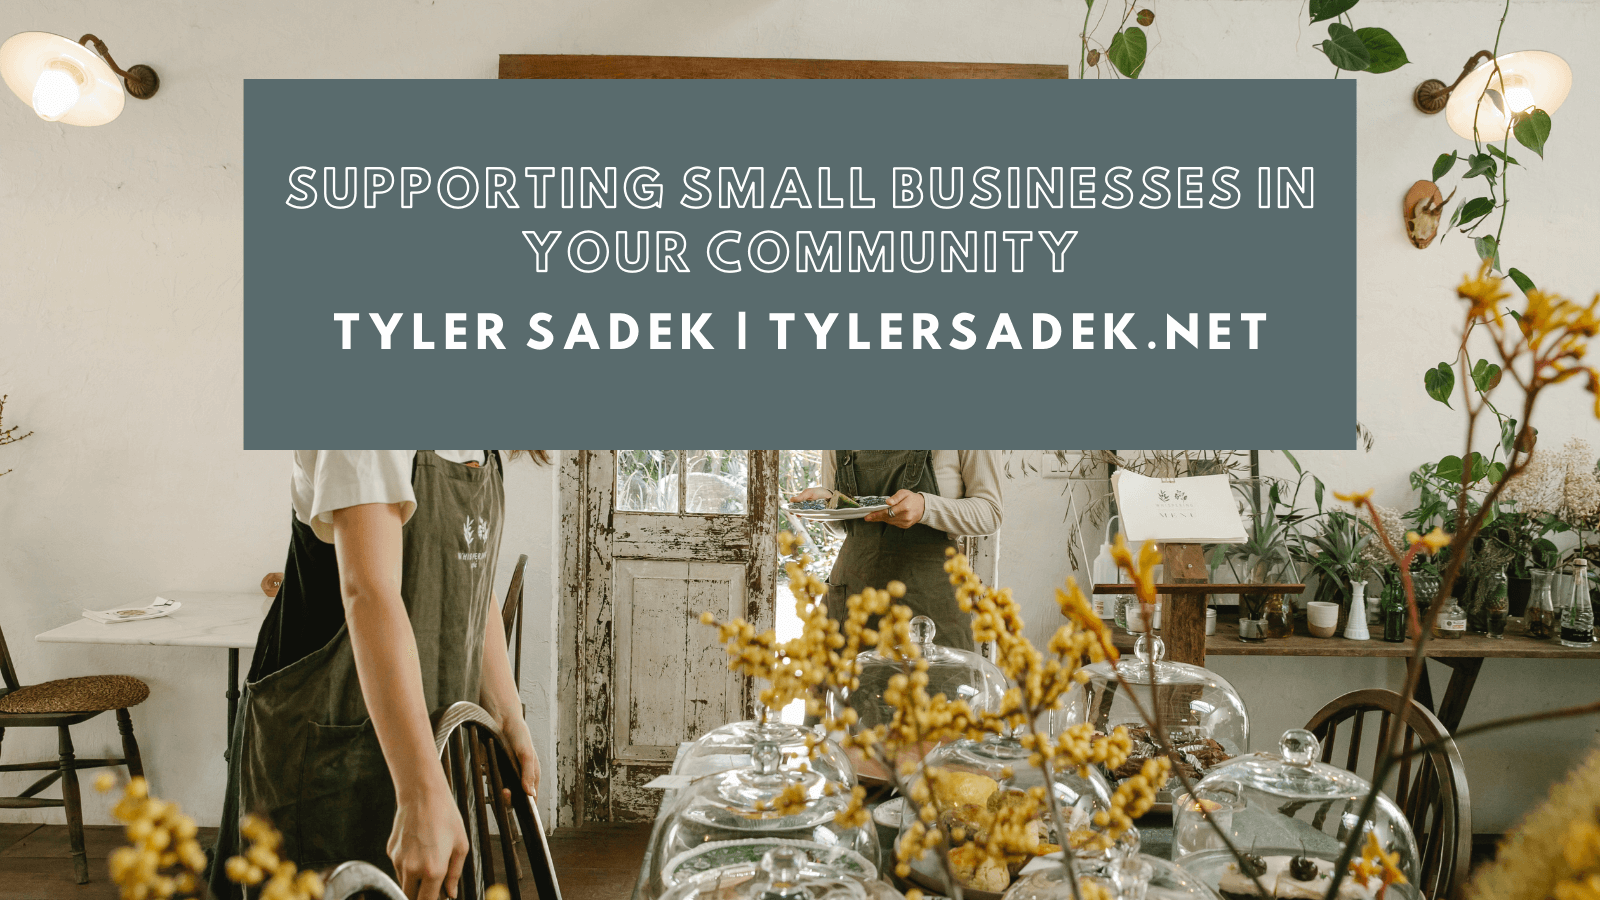 SUPPORTING SMALL BUSINESSES IN Z
YOUR COMMUNITY 7X

TYLER SADEK | TYLERSADEK.NET Fon